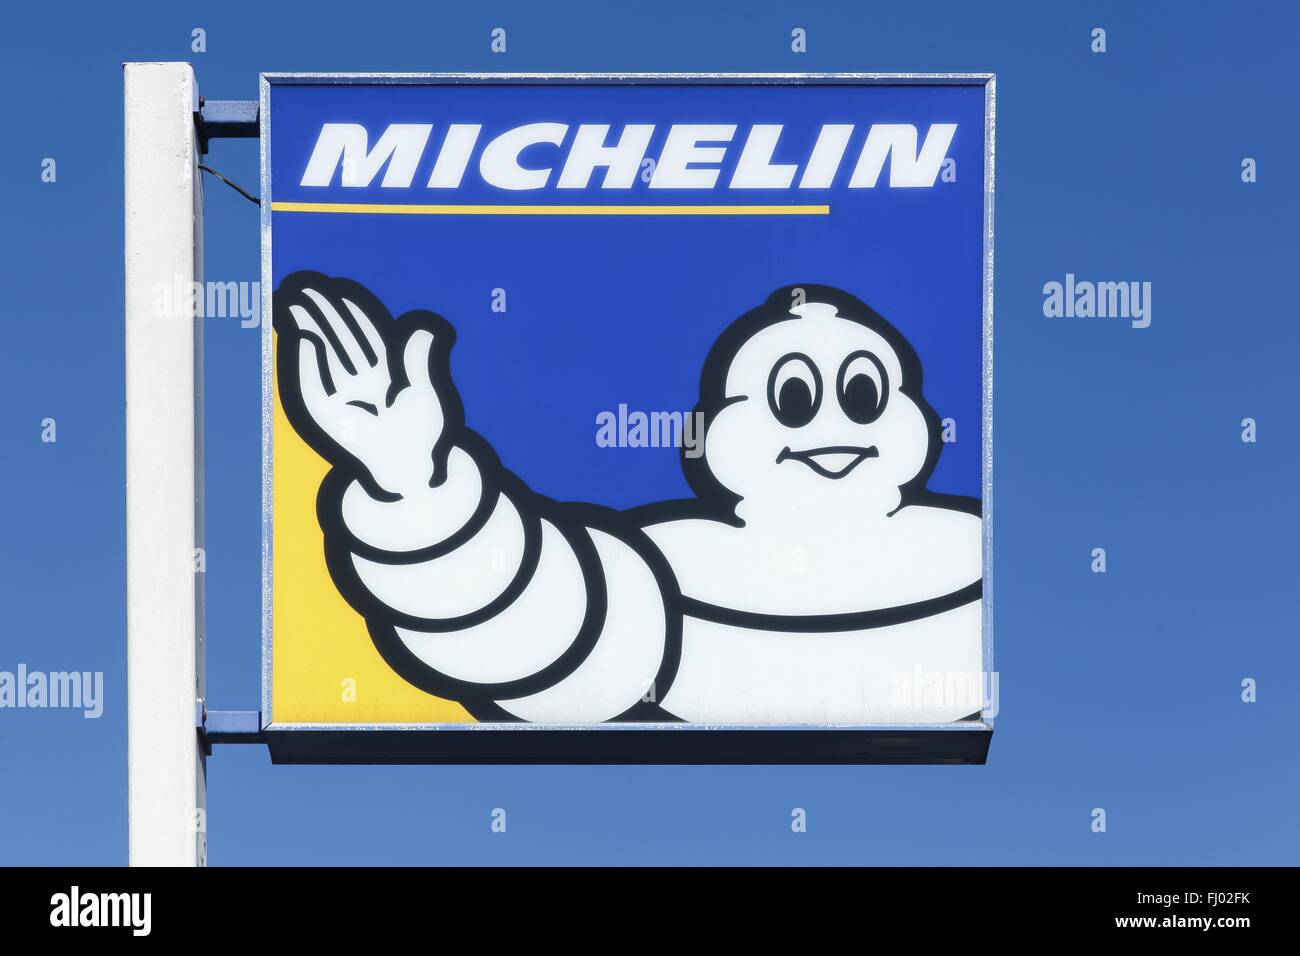 Michelin logo on a pole Stock Photo